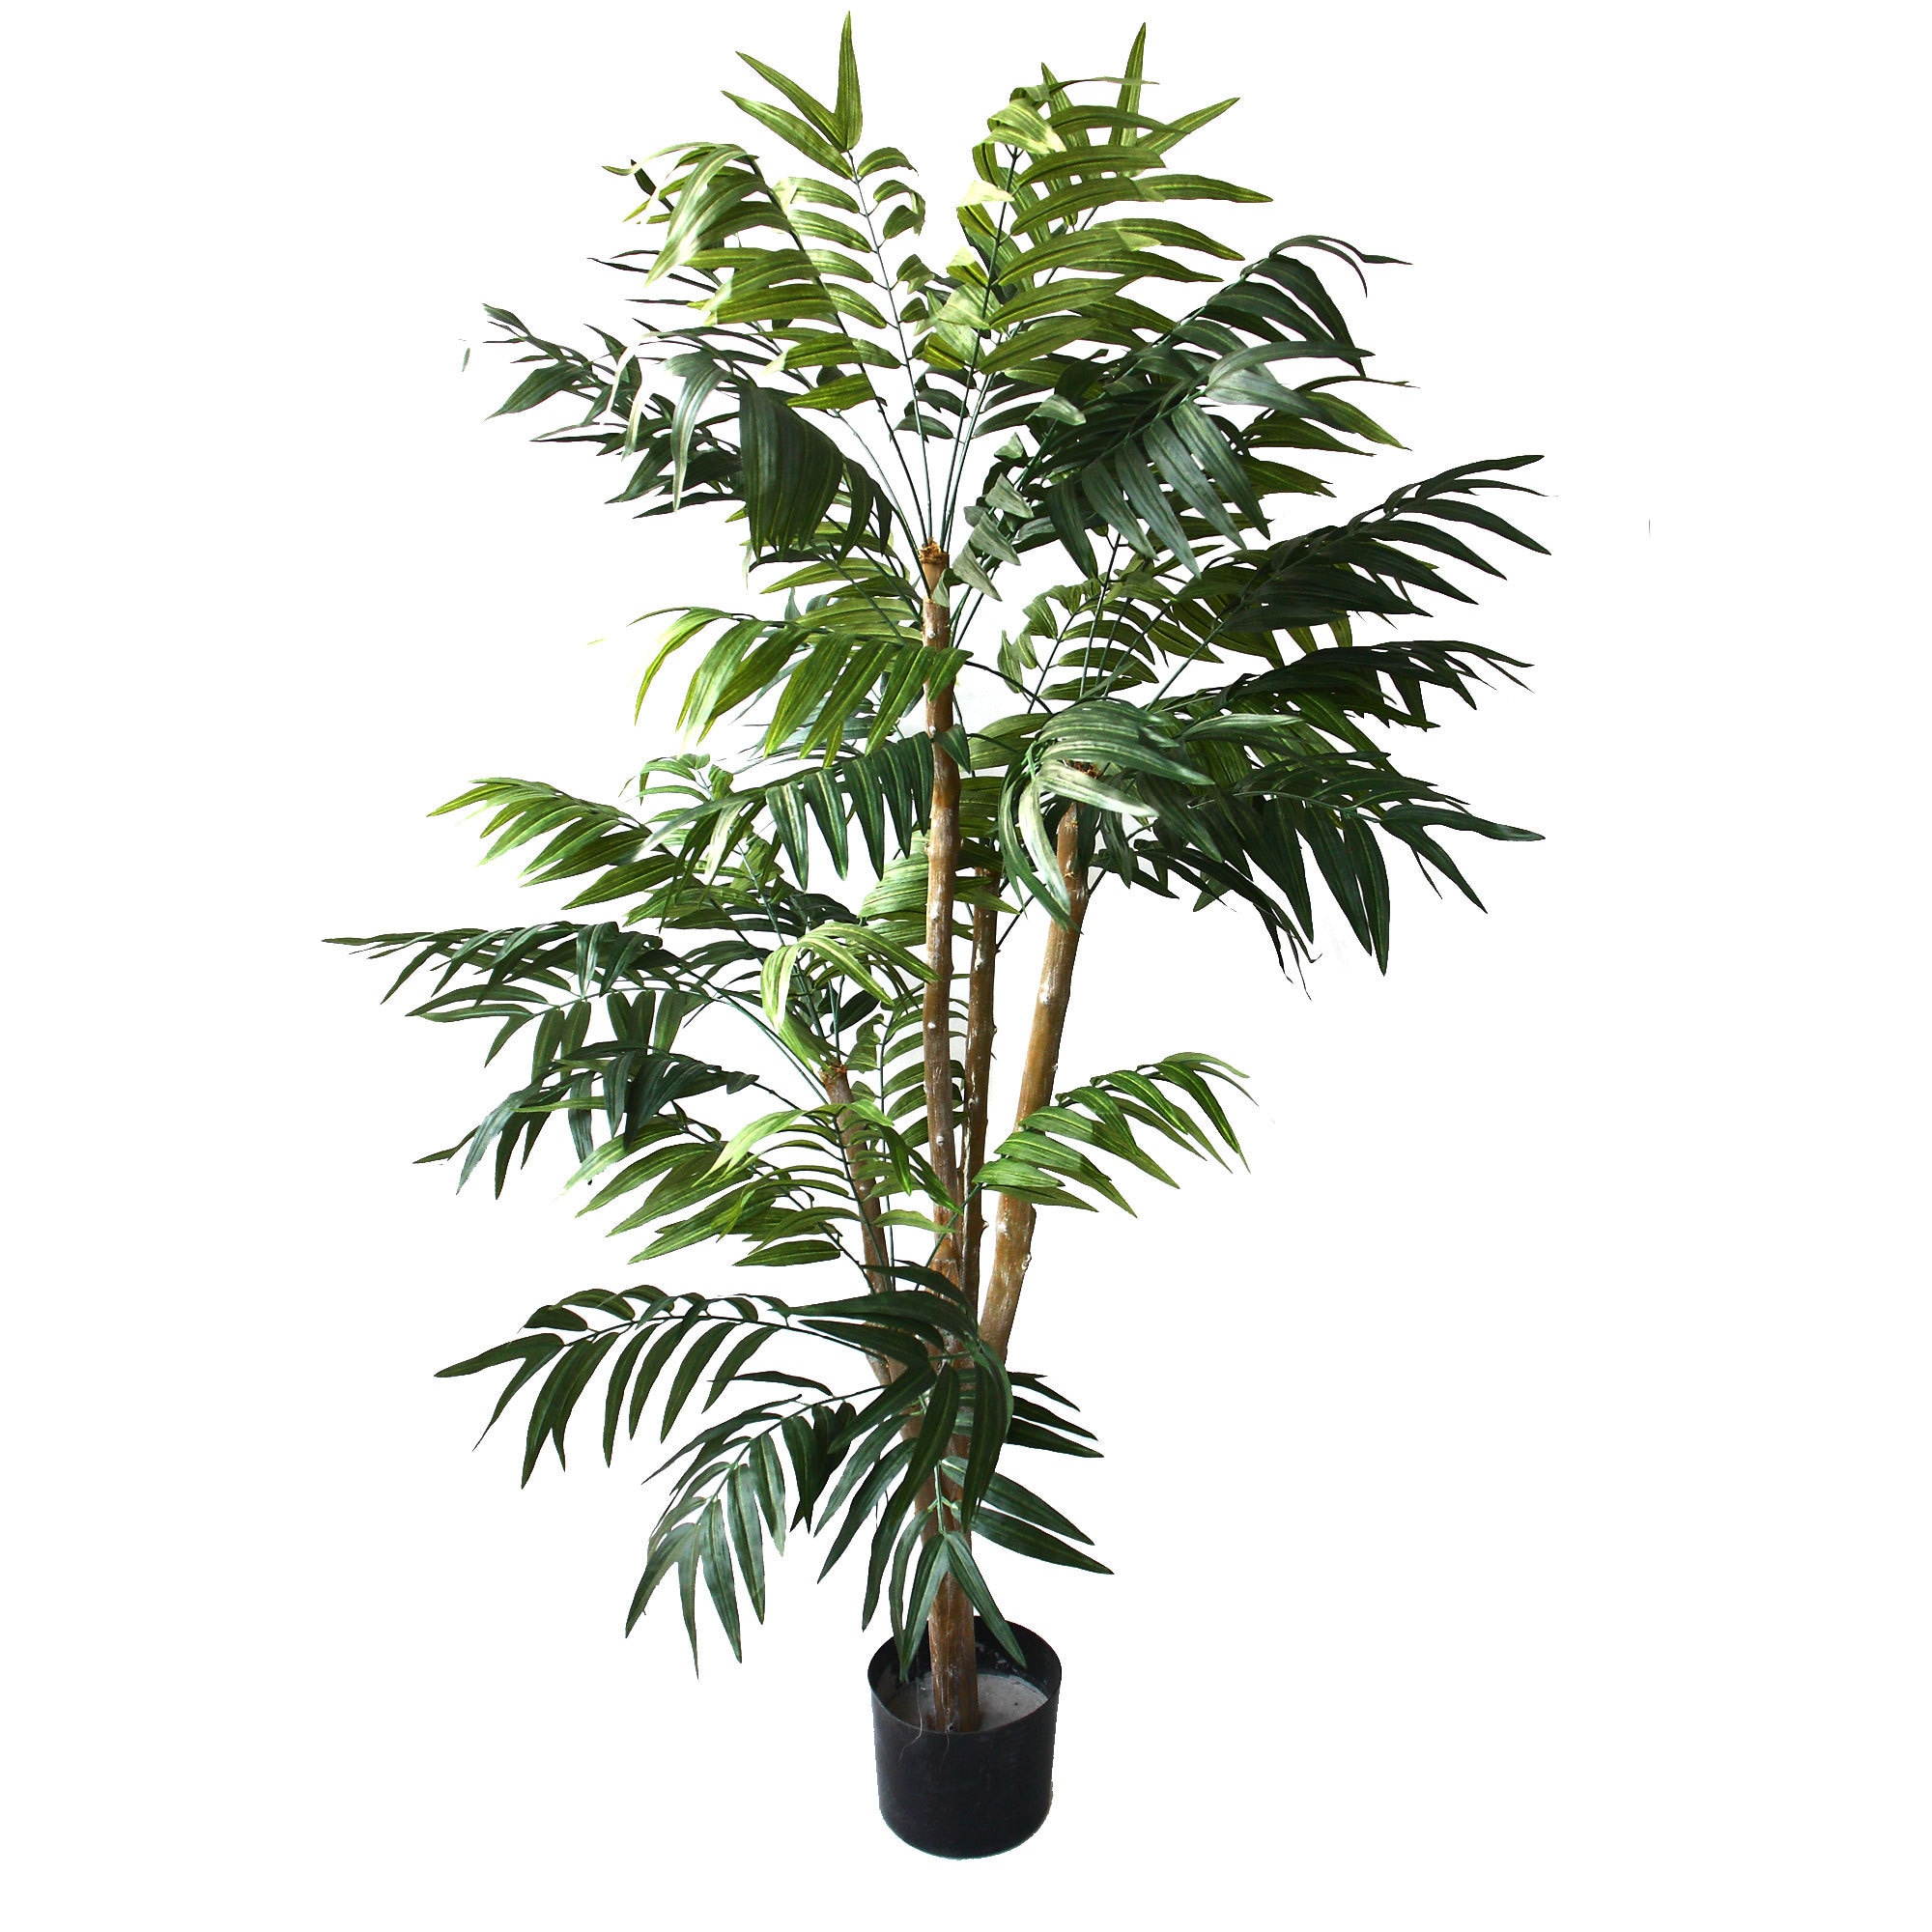 Romano 5 foot Indoor/ Outdoor Tropical Palm Tree